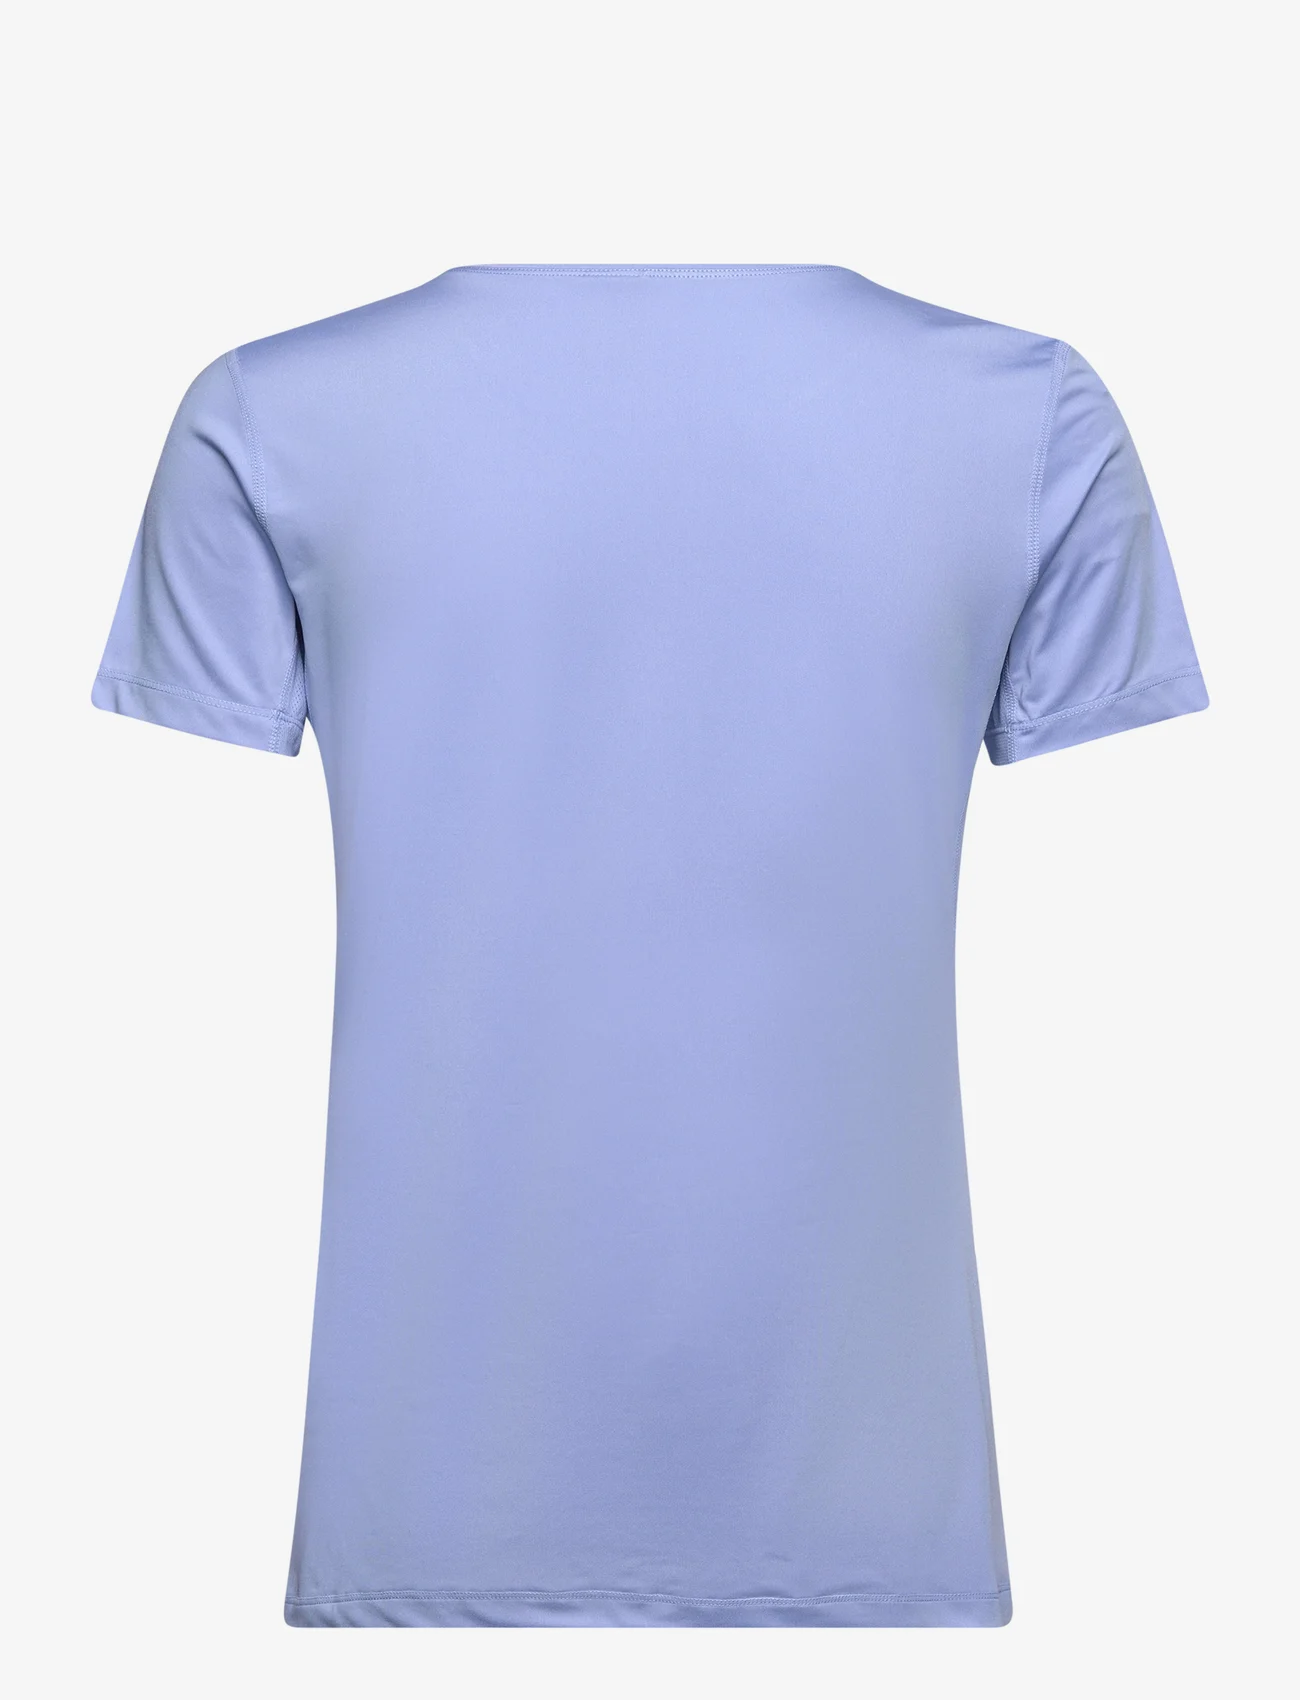 Kari Traa - NORA 2.0 TEE - t-shirts - pastel light blue - 1